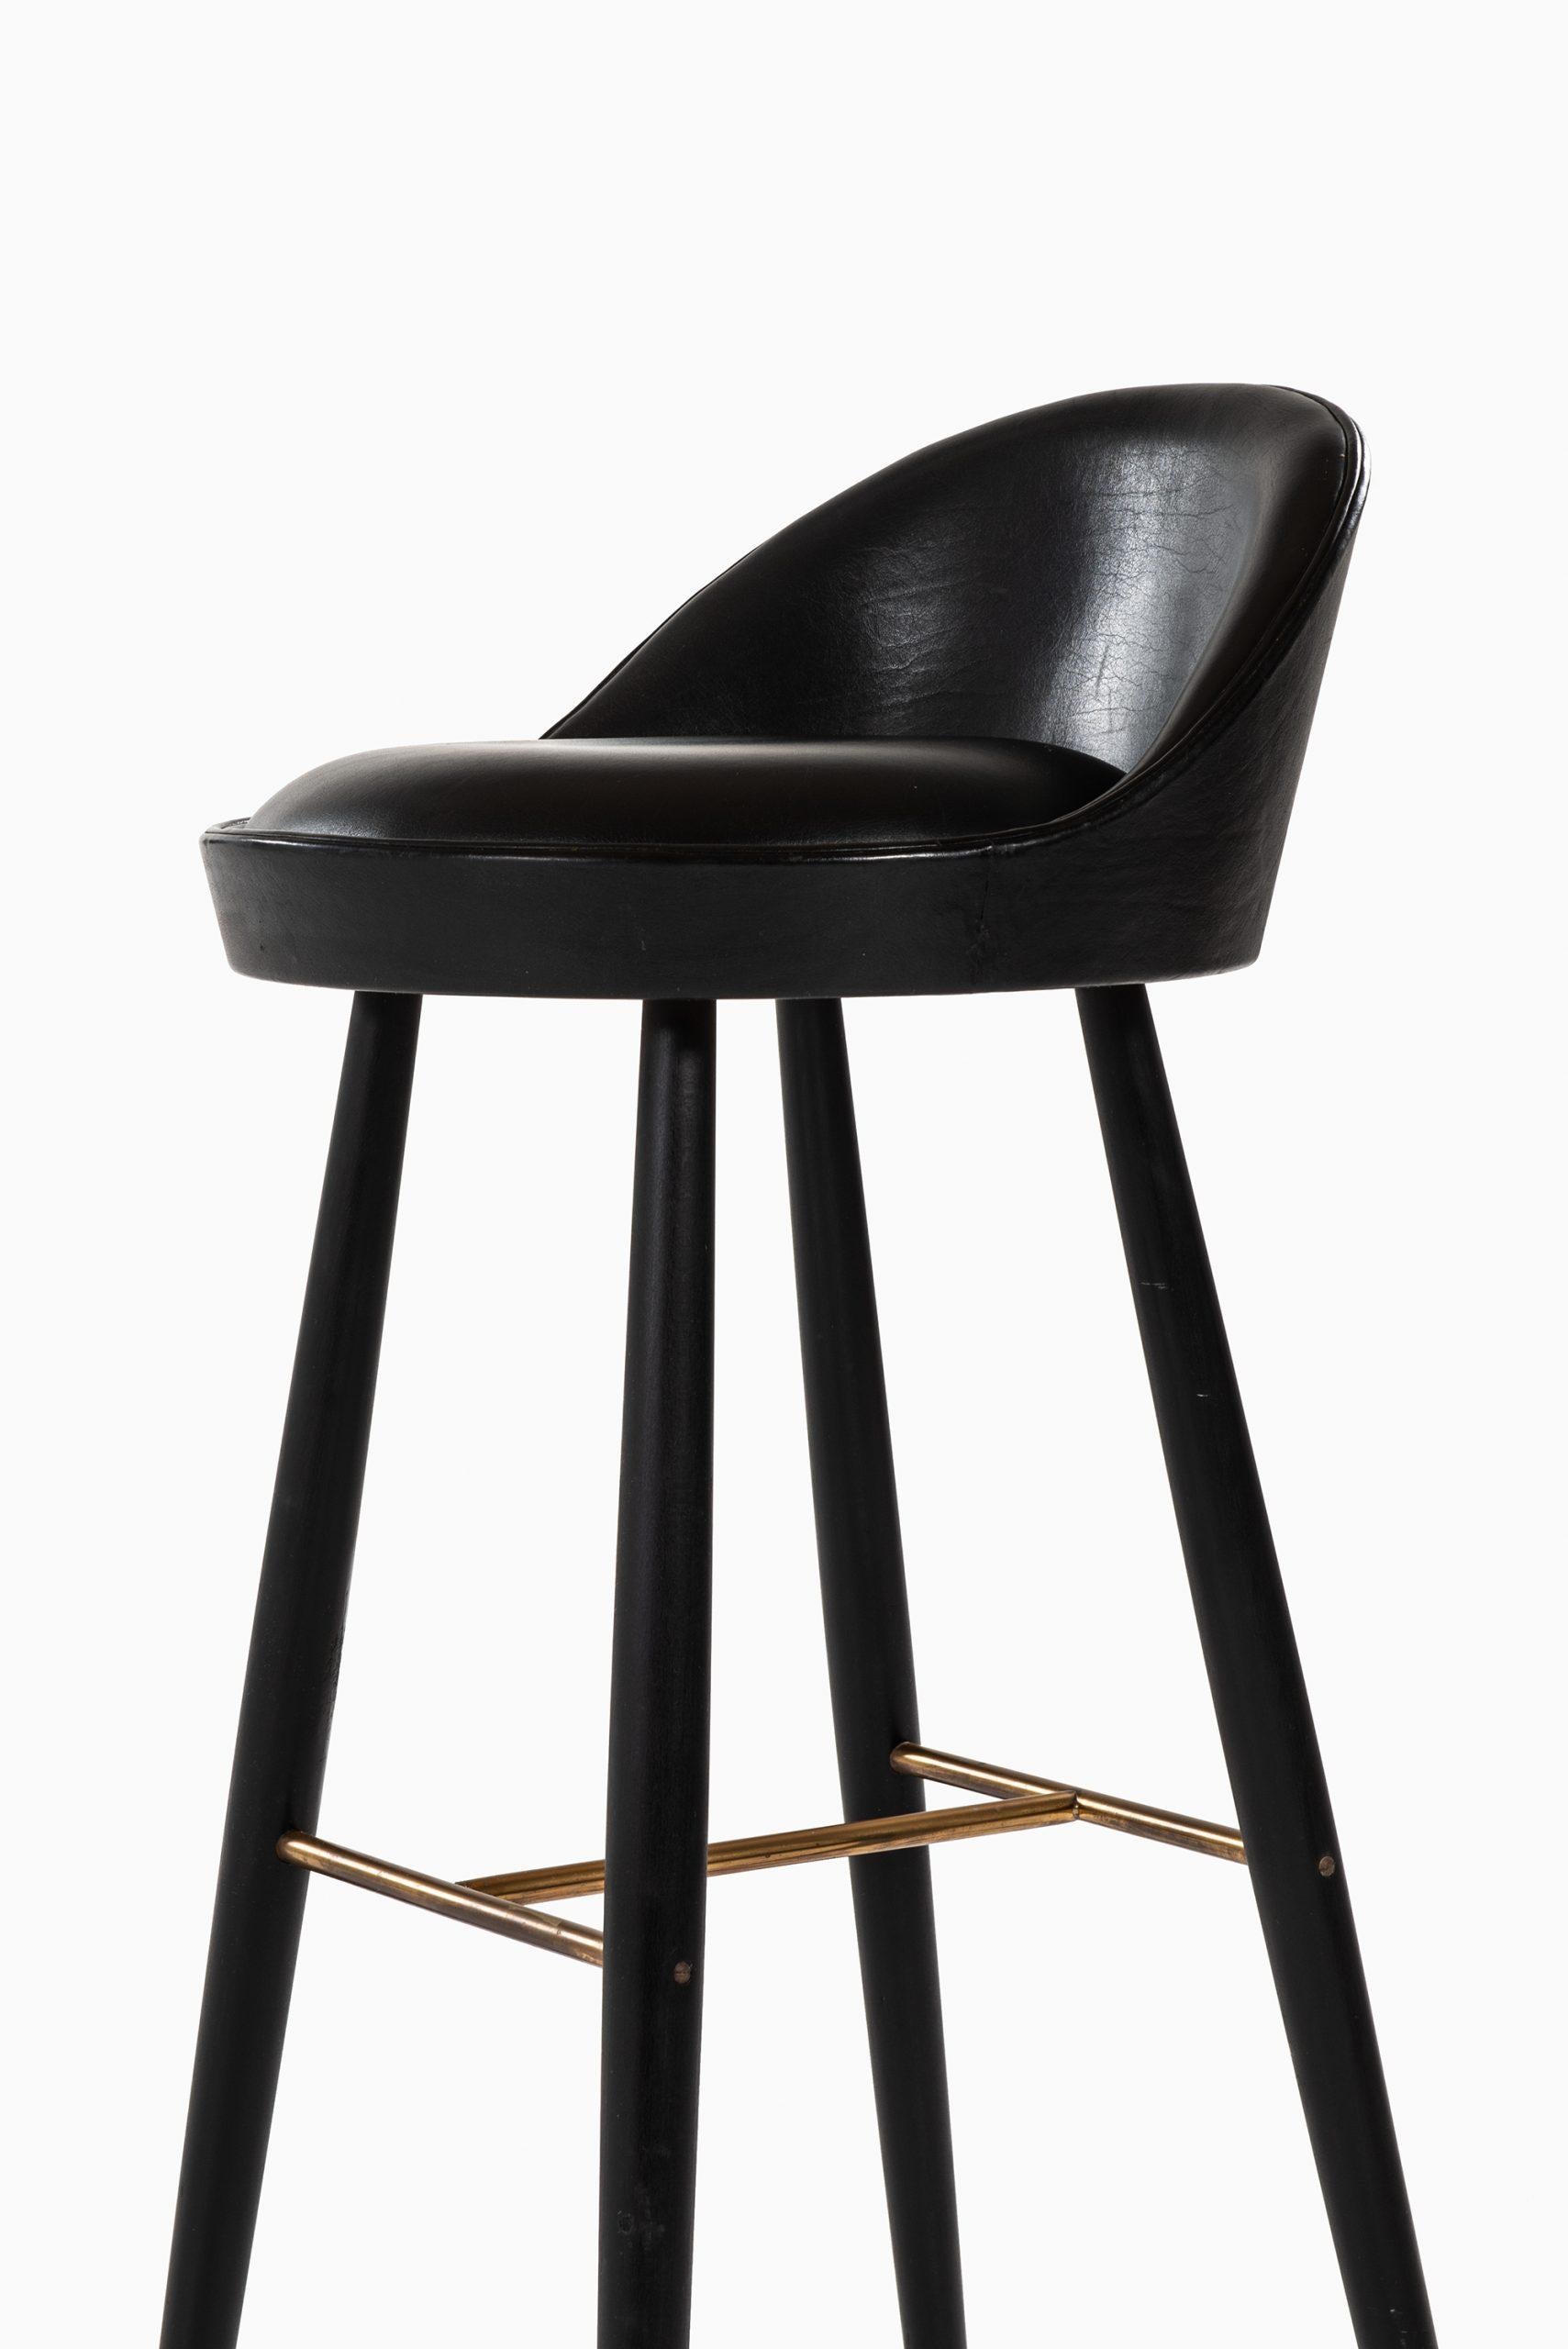 Very rare bar stools model KV 58 designed by Knud Vodder. Produced by cabinetmaker Niels Vodder in Denmark.